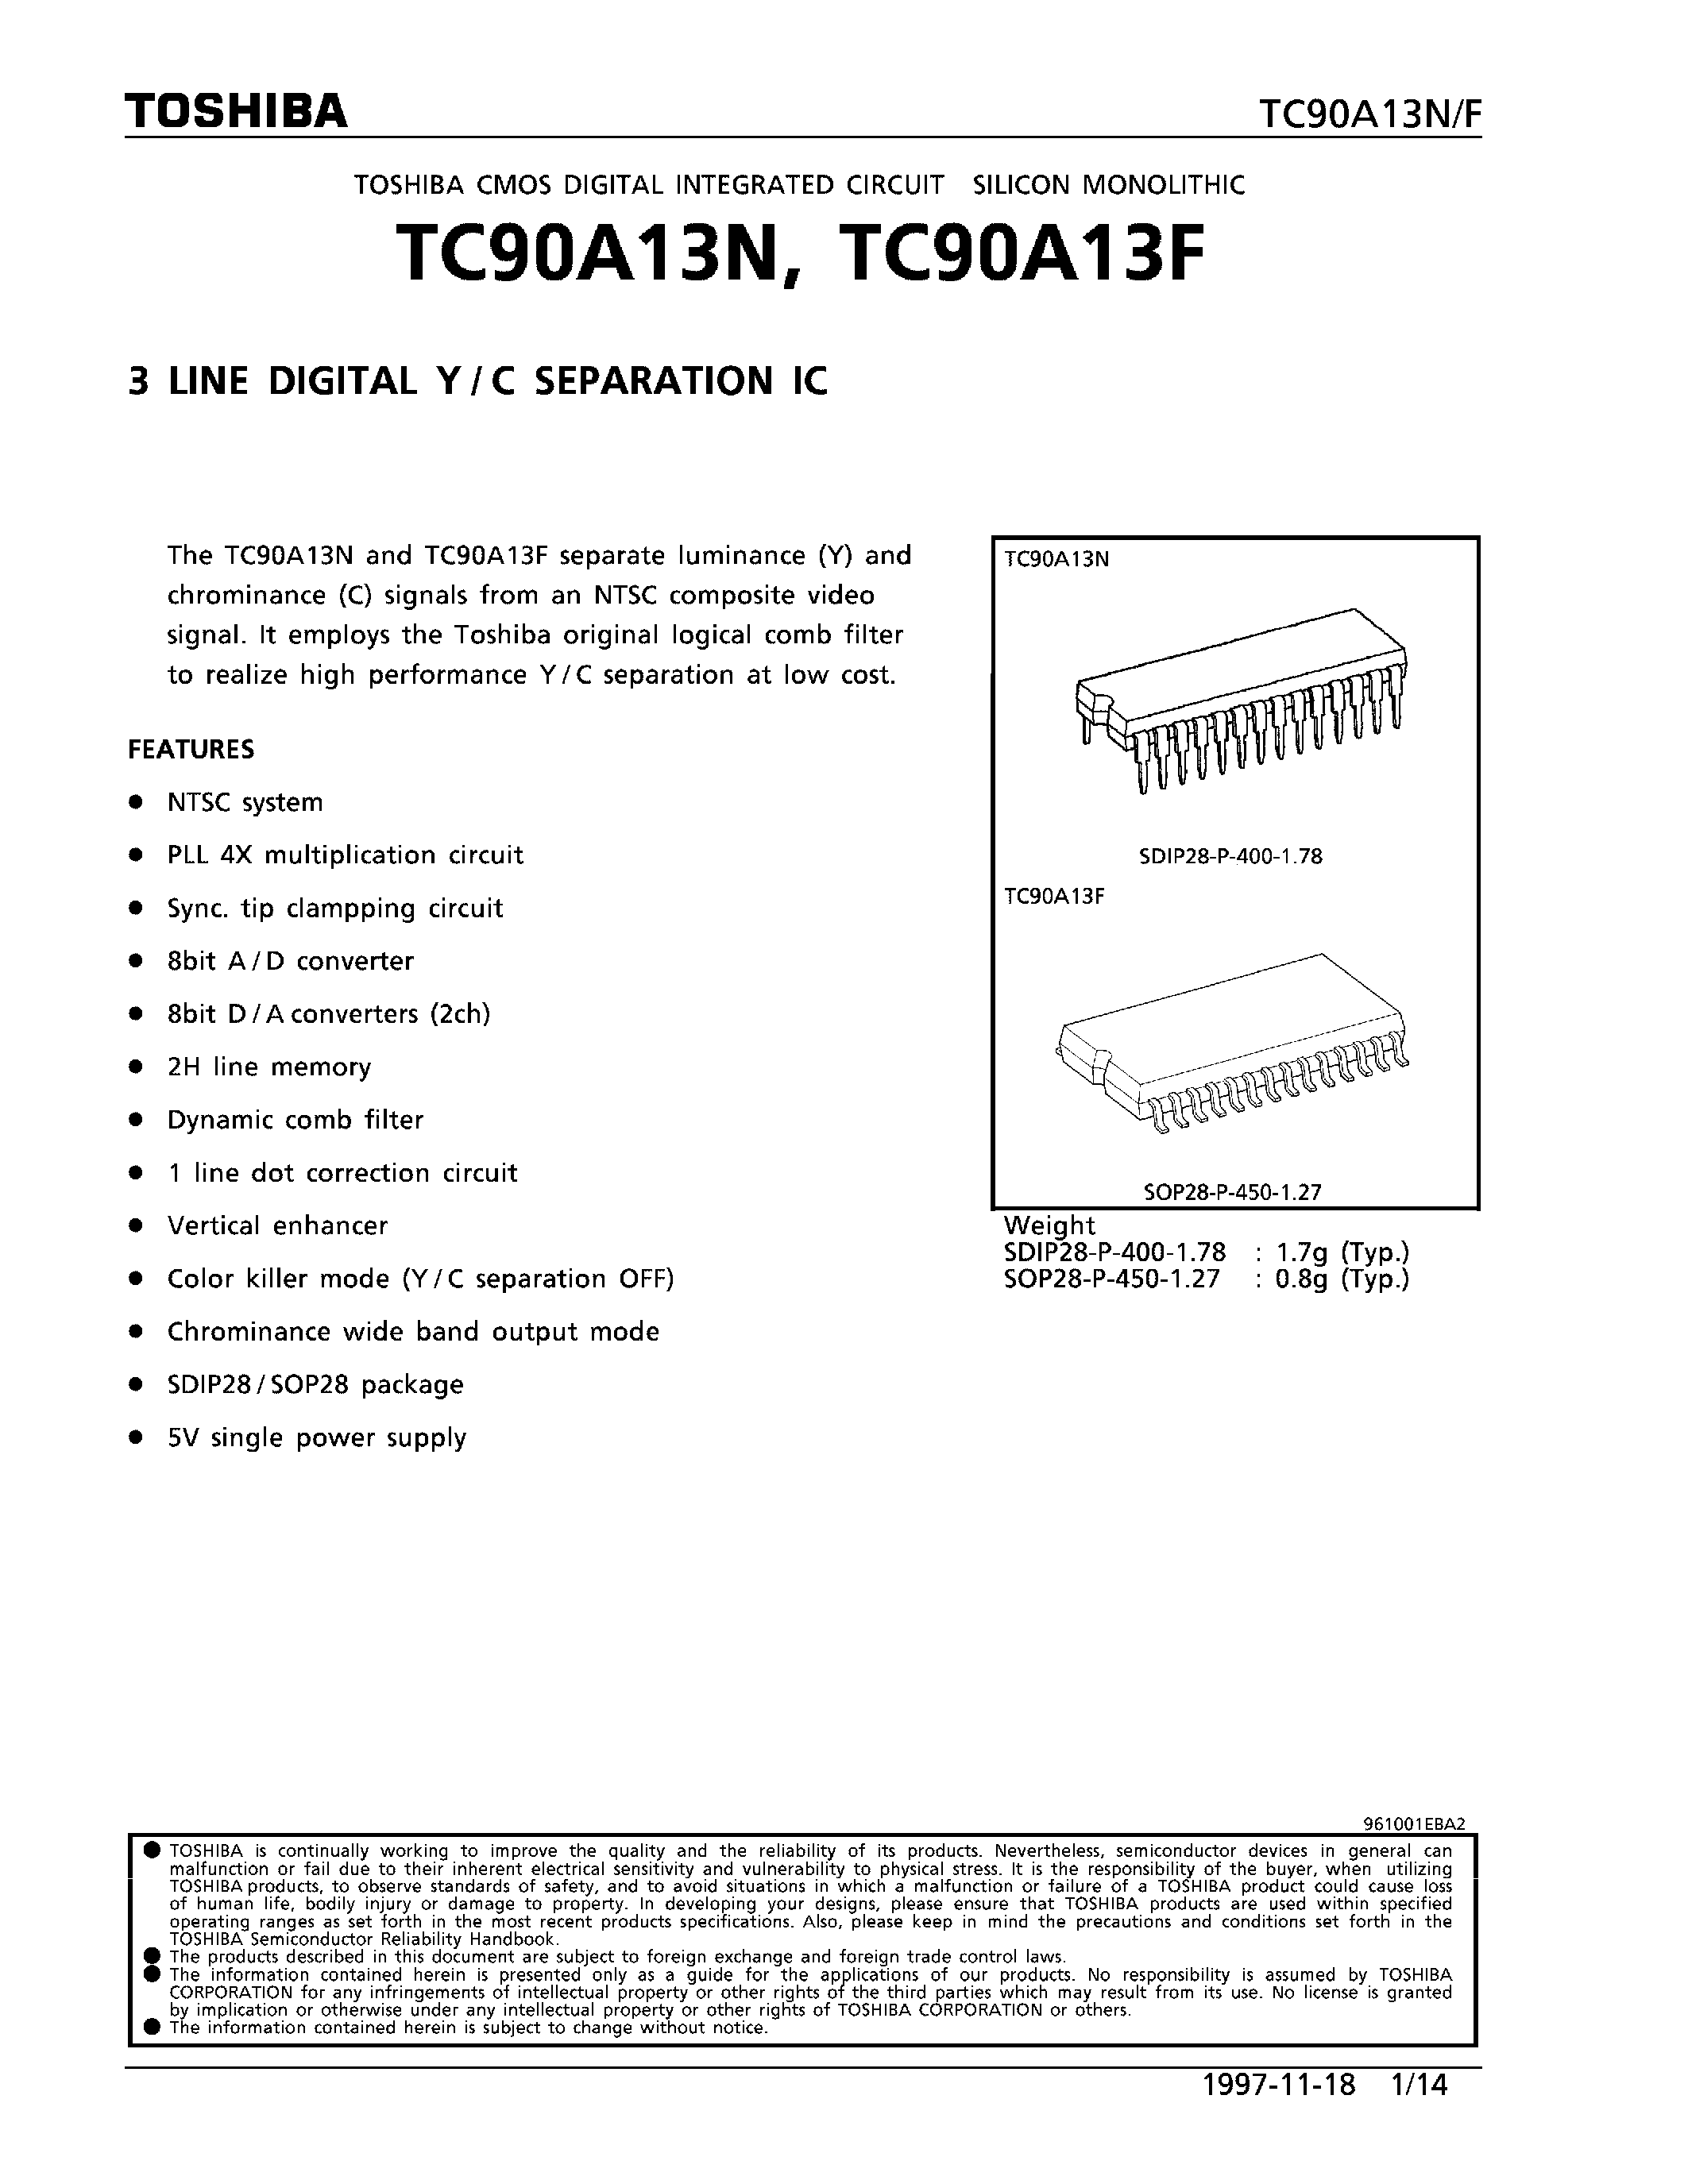 Datasheet TC90A13N - 3 LINE DIGITAL Y/C SEPARATION IC page 1